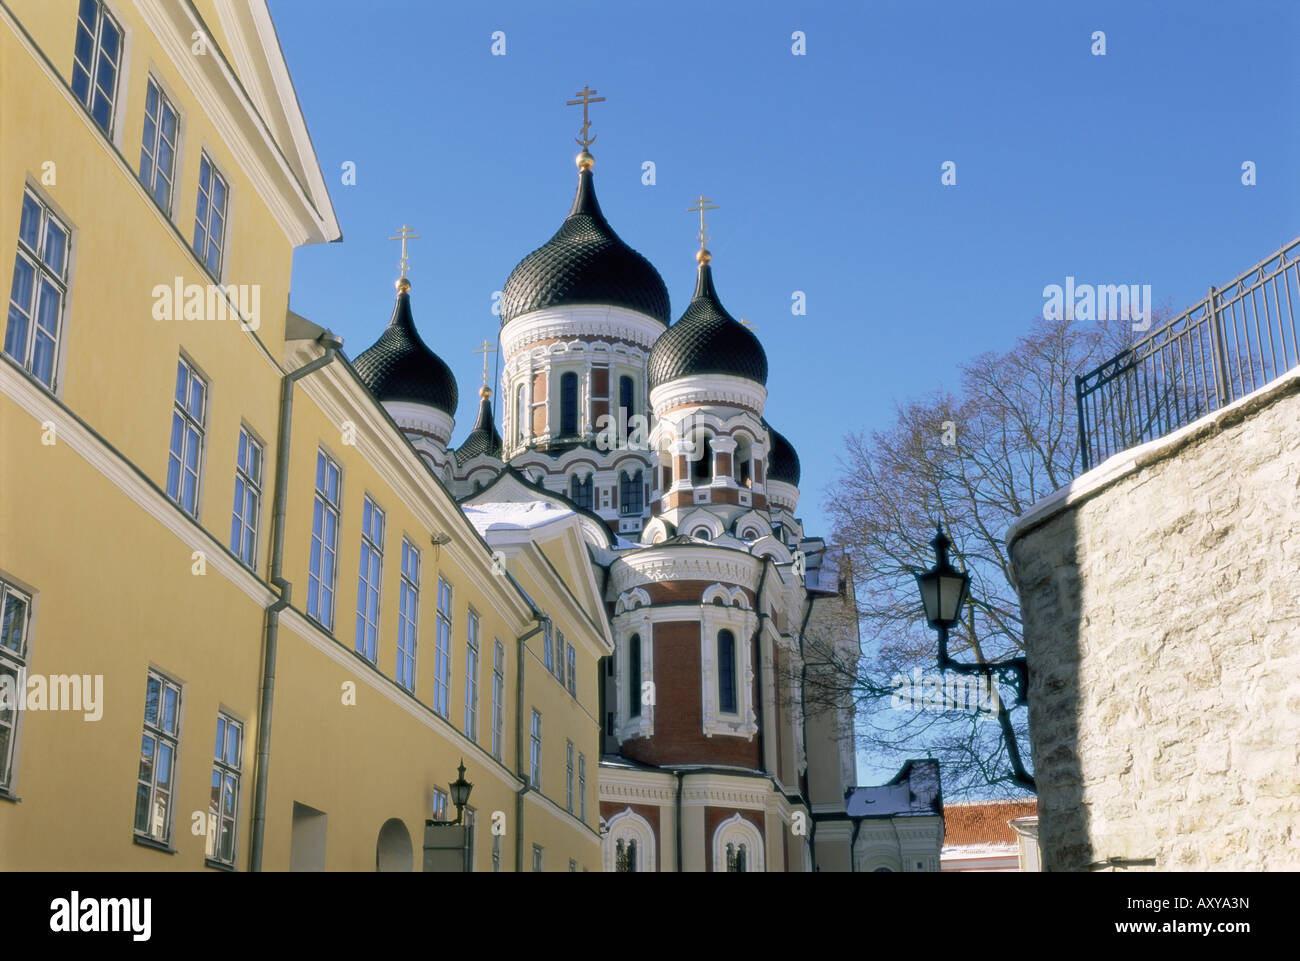 Alexander Nevsky Christian cathedral, the Old Town, Tallinn, UNESCO World Heritage Site, Estonia, Baltic States, Europe Stock Photo